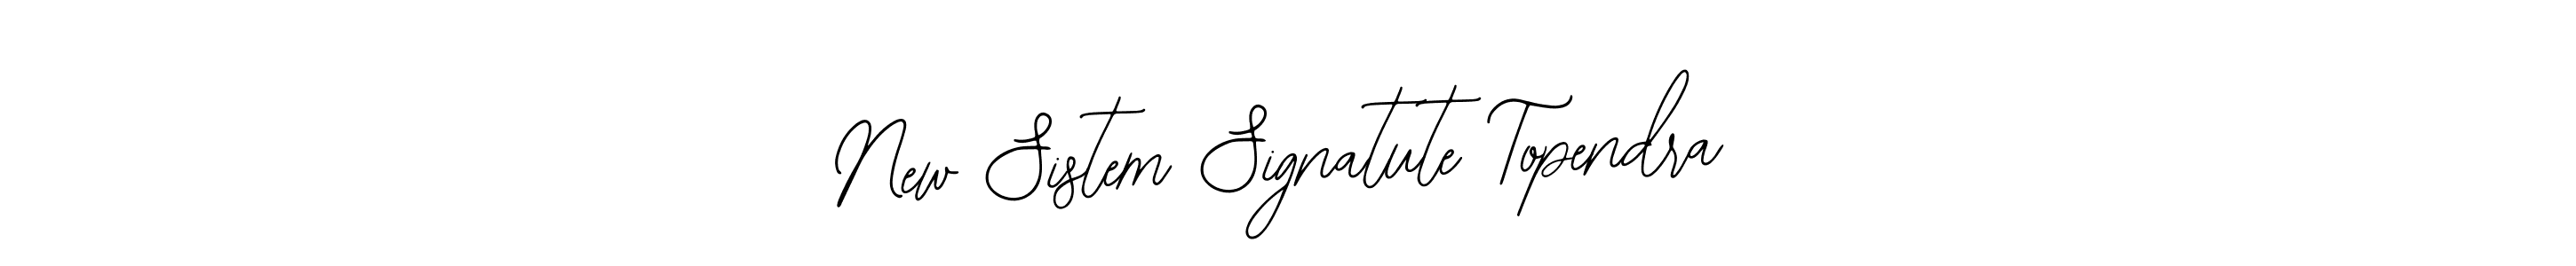 How to make New Sistem Signatute Topendra signature? Bearetta-2O07w is a professional autograph style. Create handwritten signature for New Sistem Signatute Topendra name. New Sistem Signatute Topendra signature style 12 images and pictures png